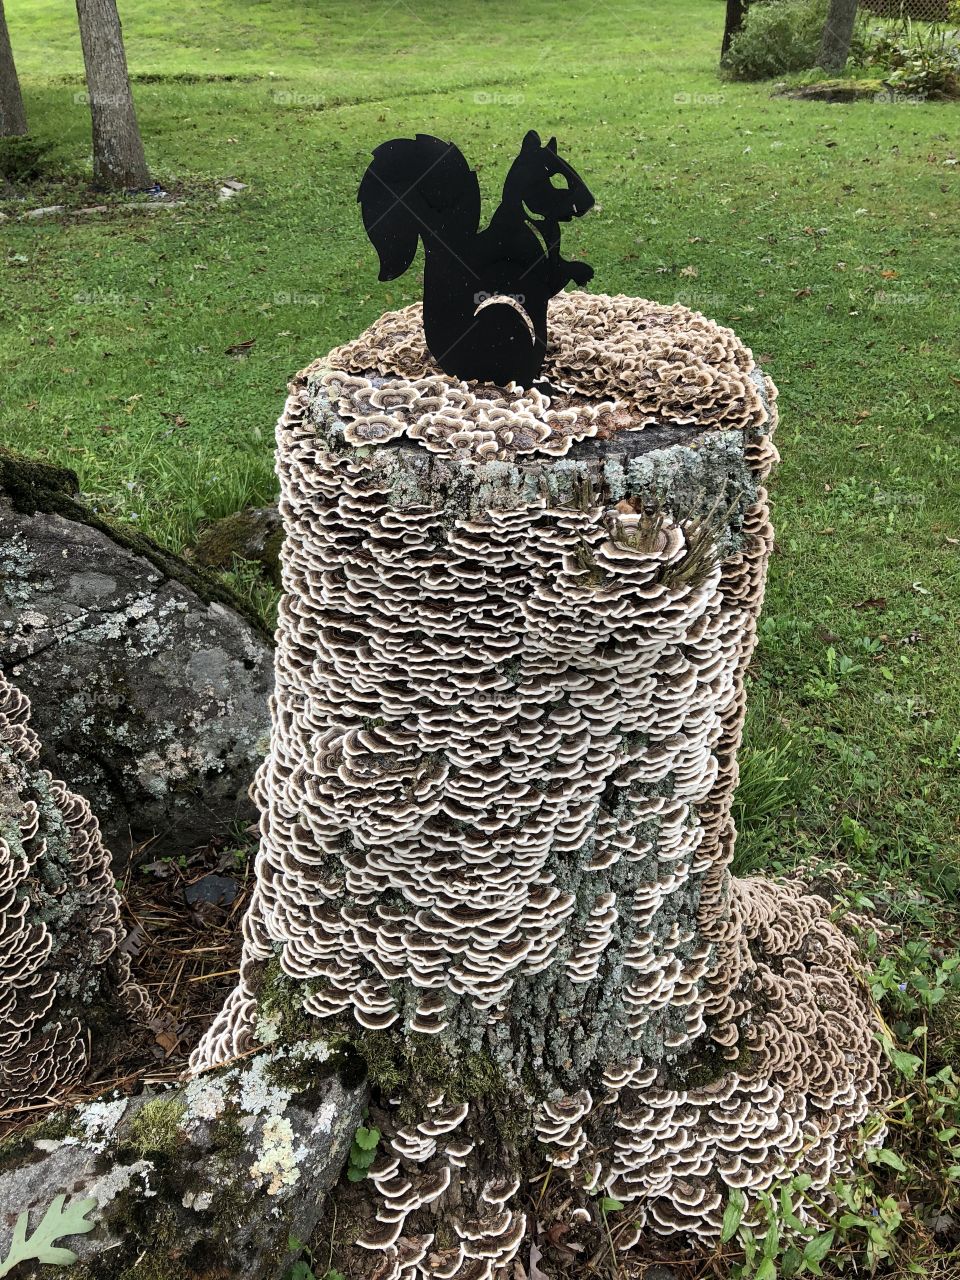 Tree stump with fungus